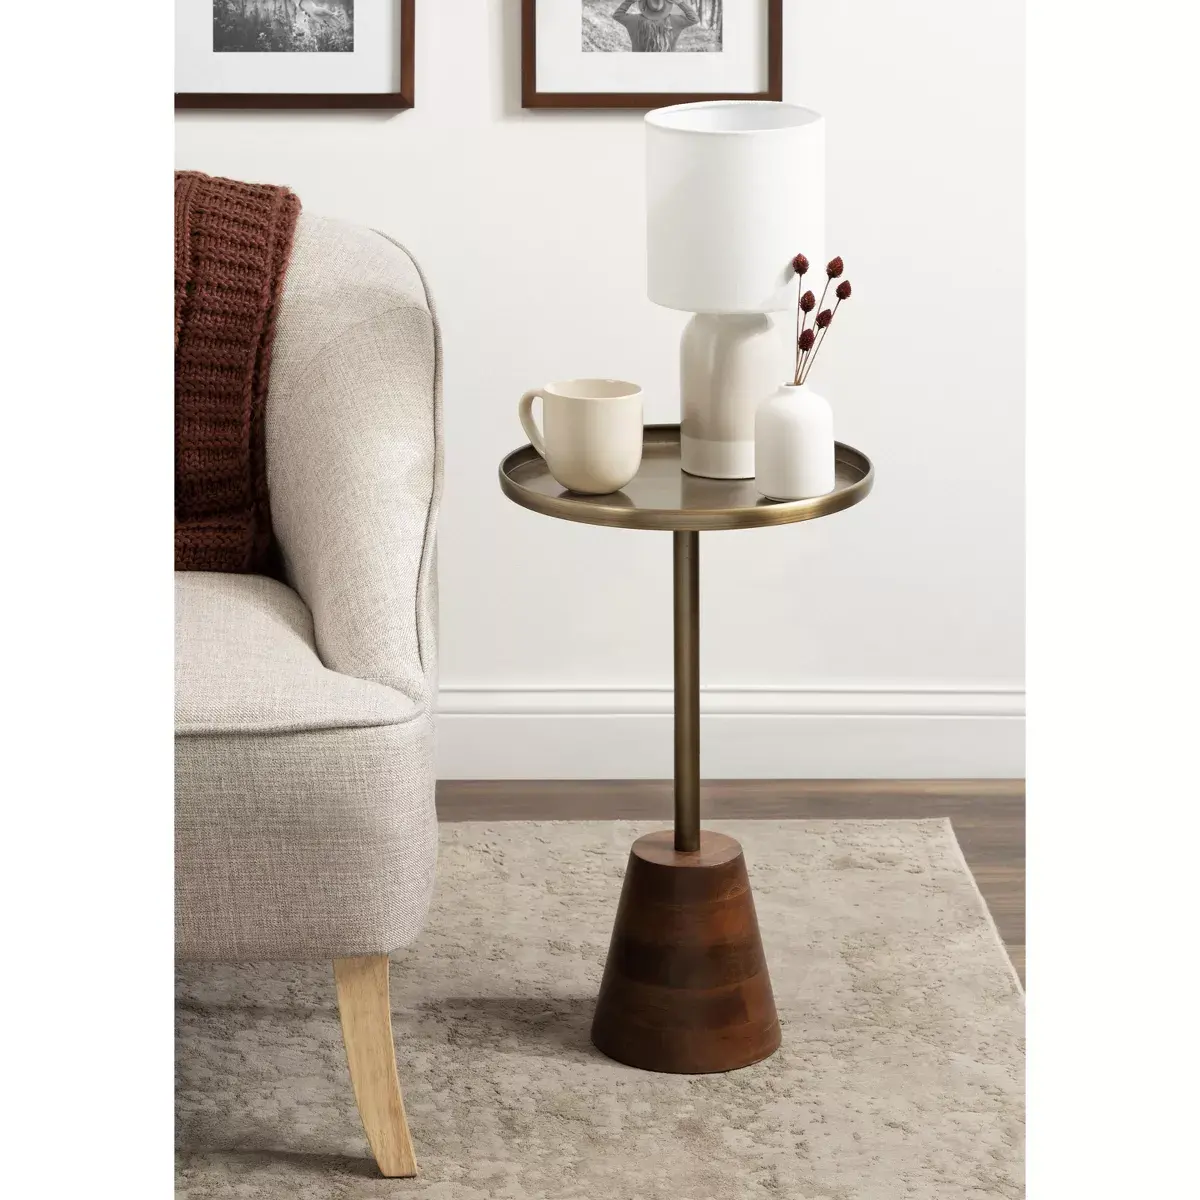 Modern Luxury Wood and Metal Side Table for Living Room  Bedroom  and Patio - Elegant Pedestal Design